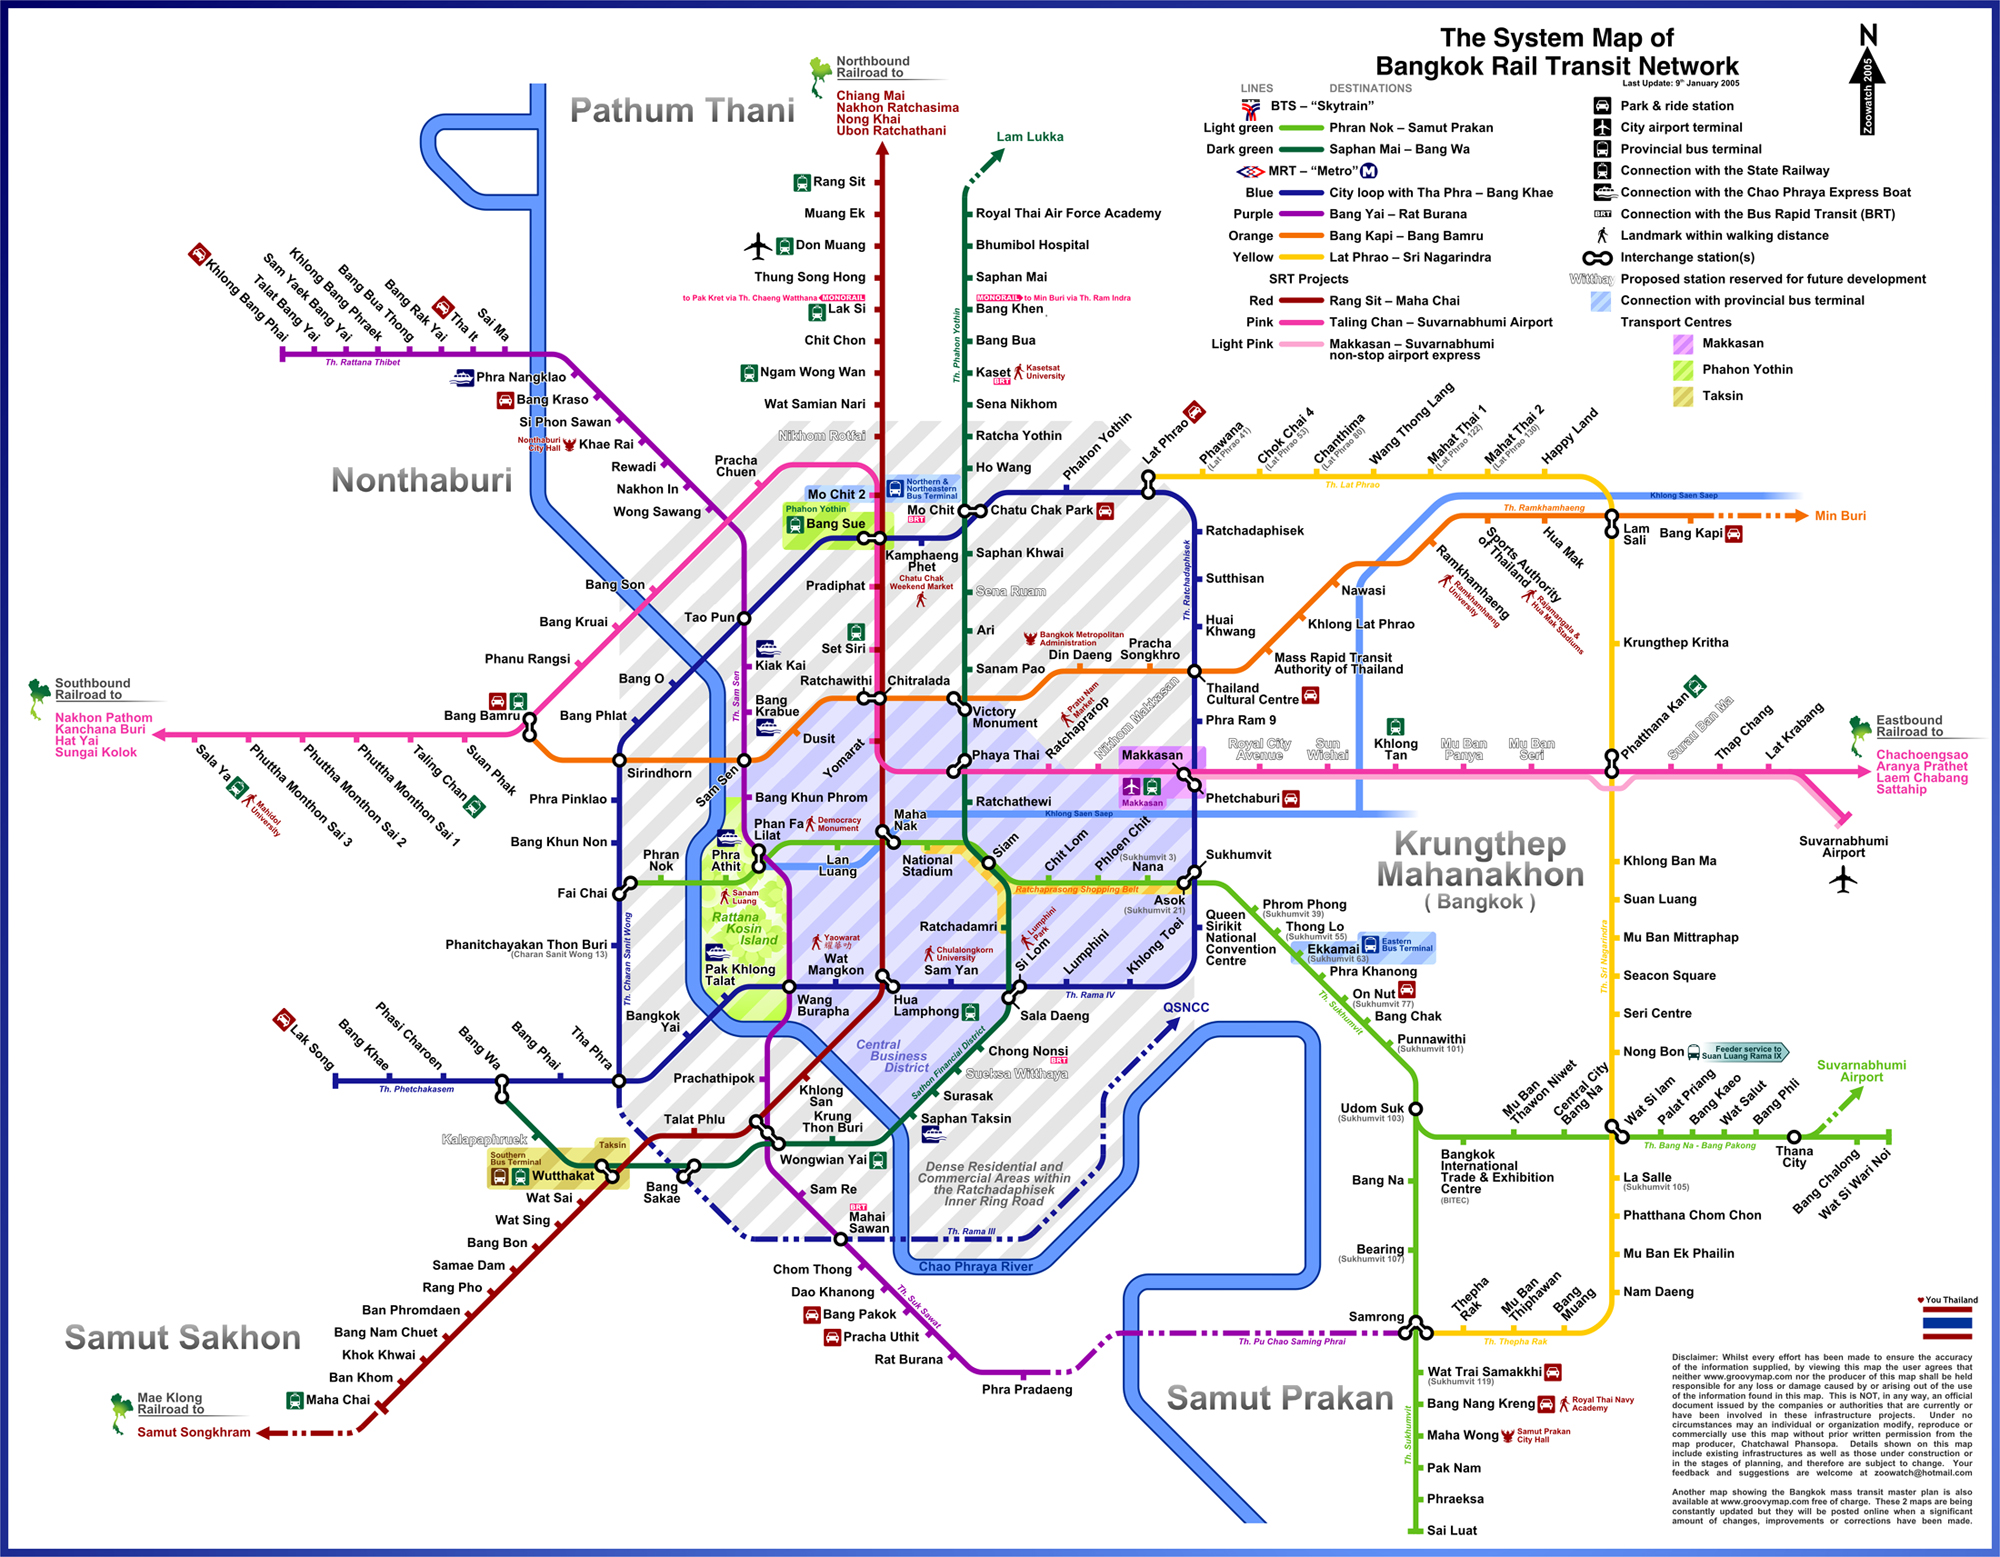 system_map_of_bangkok_rail_transit_network.jpg